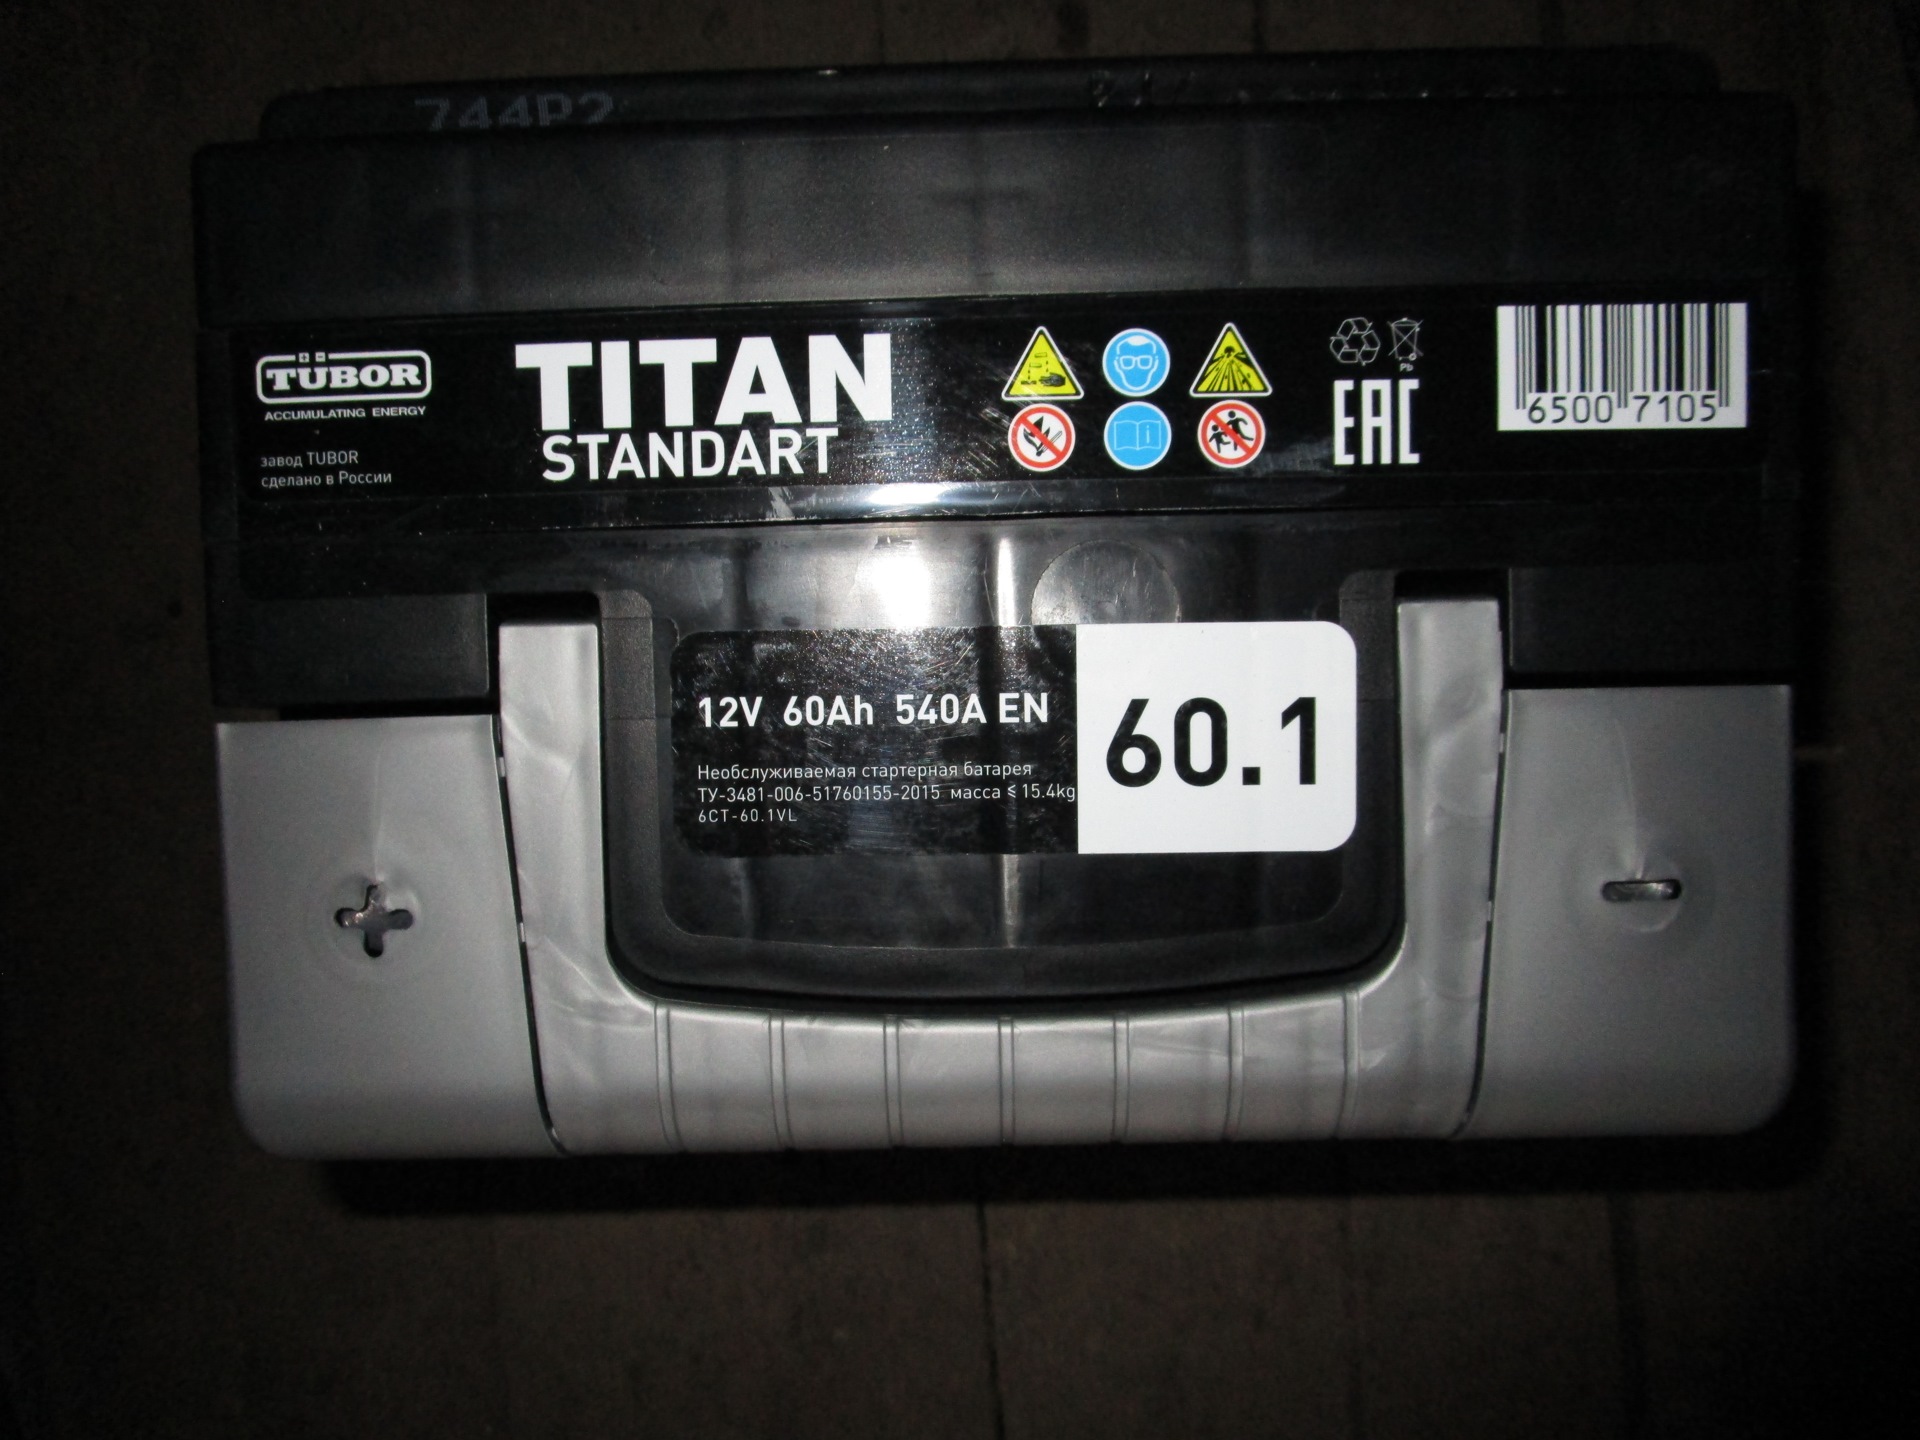 Дата аккумулятора титан. Титан стандарт 60.1 аккумулятор крышка. Год выпуска АКБ Титан стандарт 60. Аккумулятор Титан Дата выпуска 2022. Титан аккумулятор 60.1.